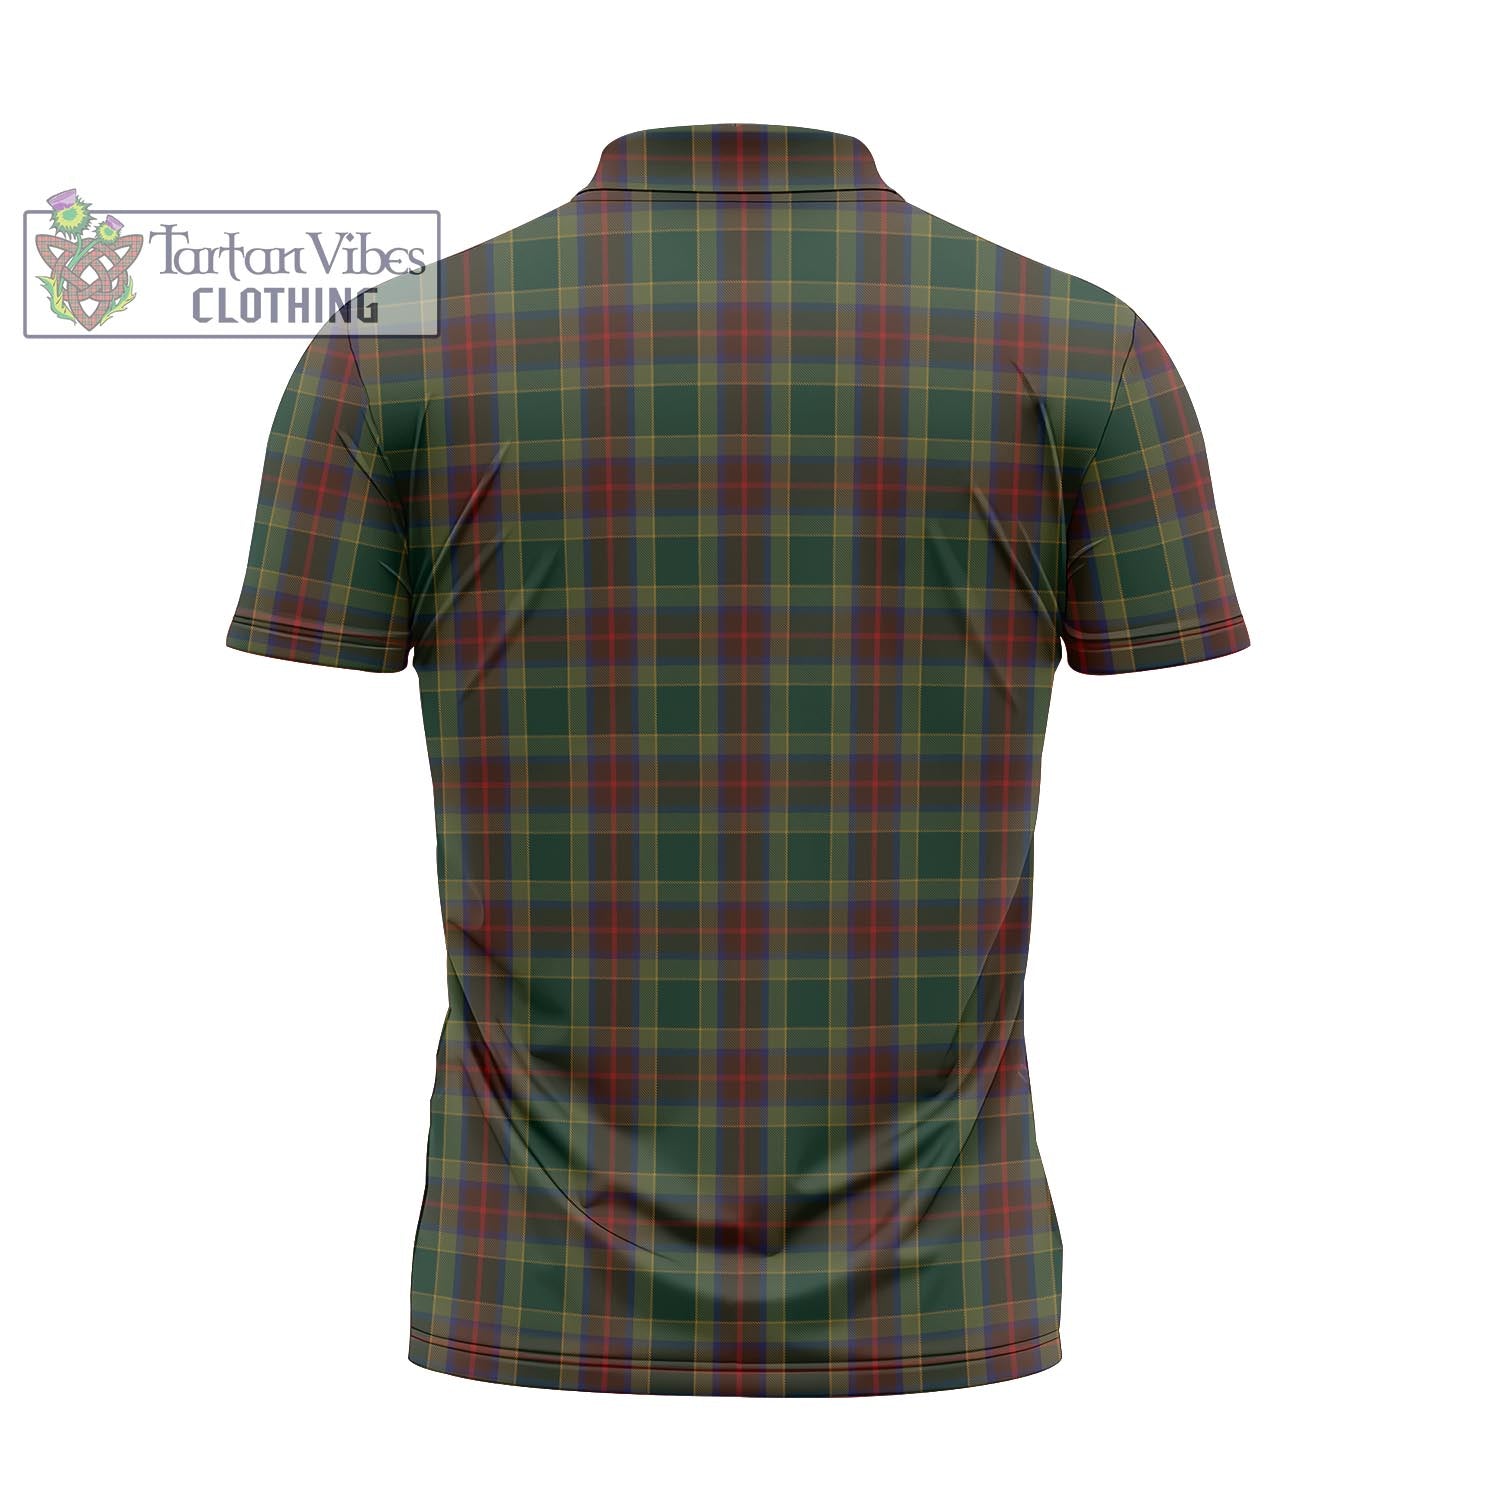 Tartan Vibes Clothing Waterford County Ireland Tartan Zipper Polo Shirt